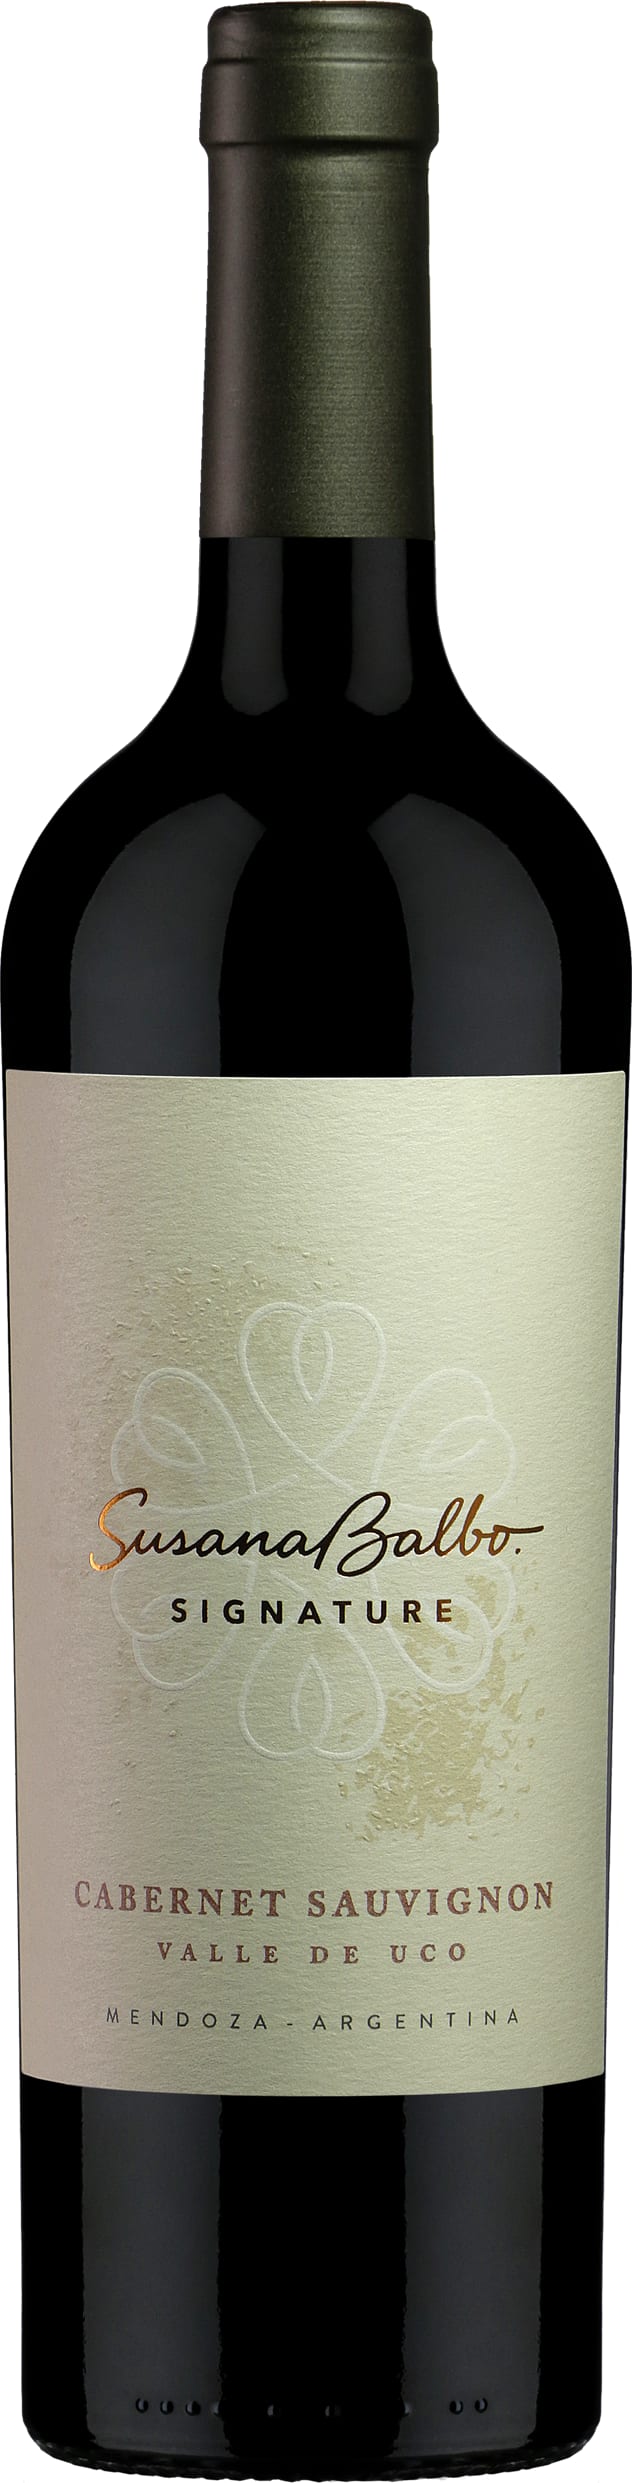 Susana Balbo Signature Reserve Cabernet 2021 75cl - Buy Susana Balbo Wines from GREAT WINES DIRECT wine shop